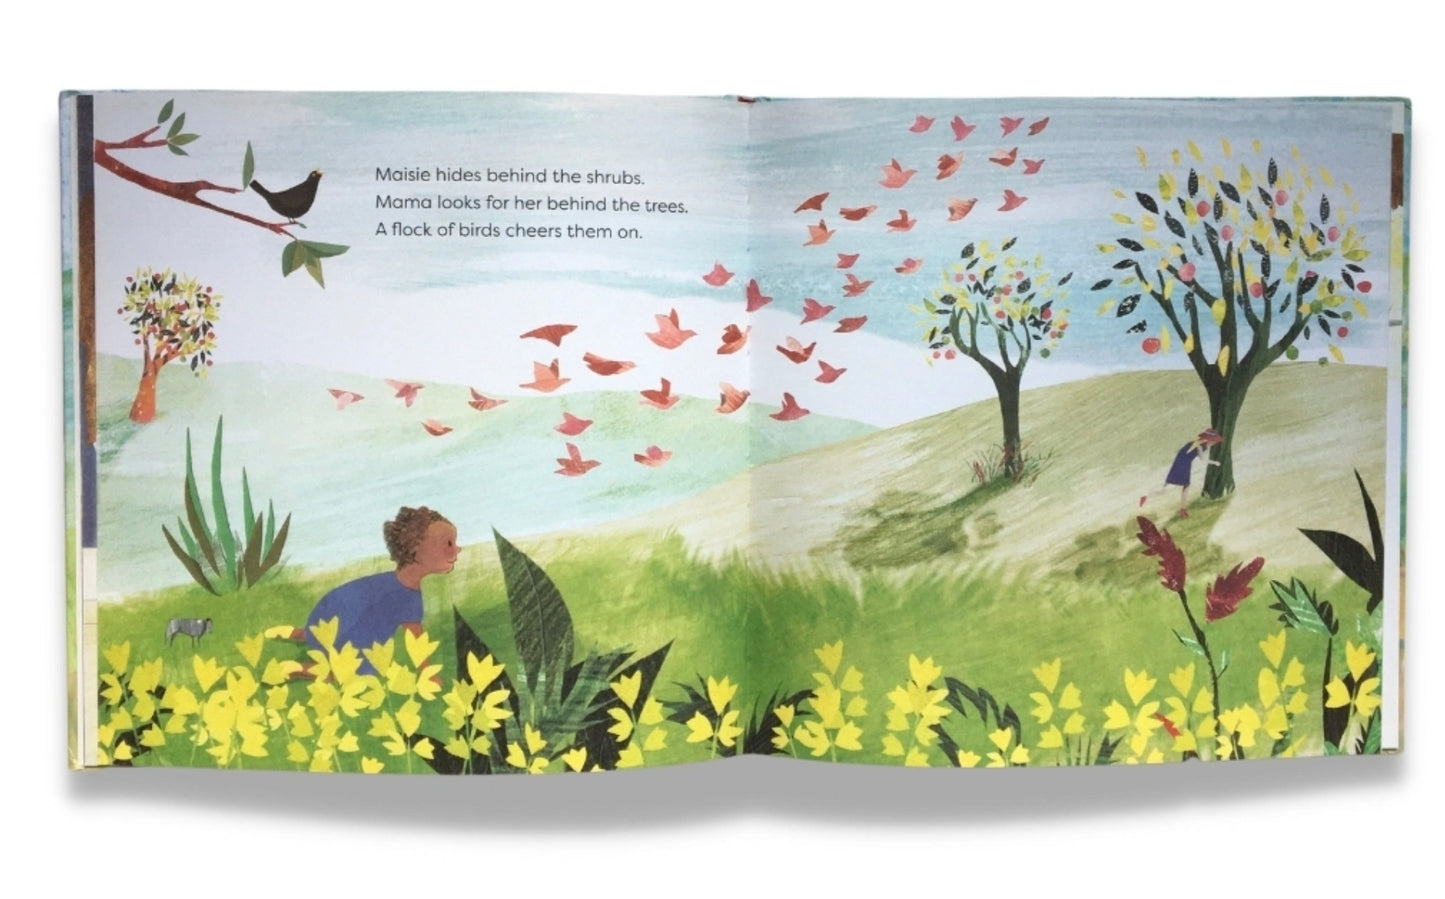 Maisie's Scrapbook: Diverse & Inclusive Children's Book